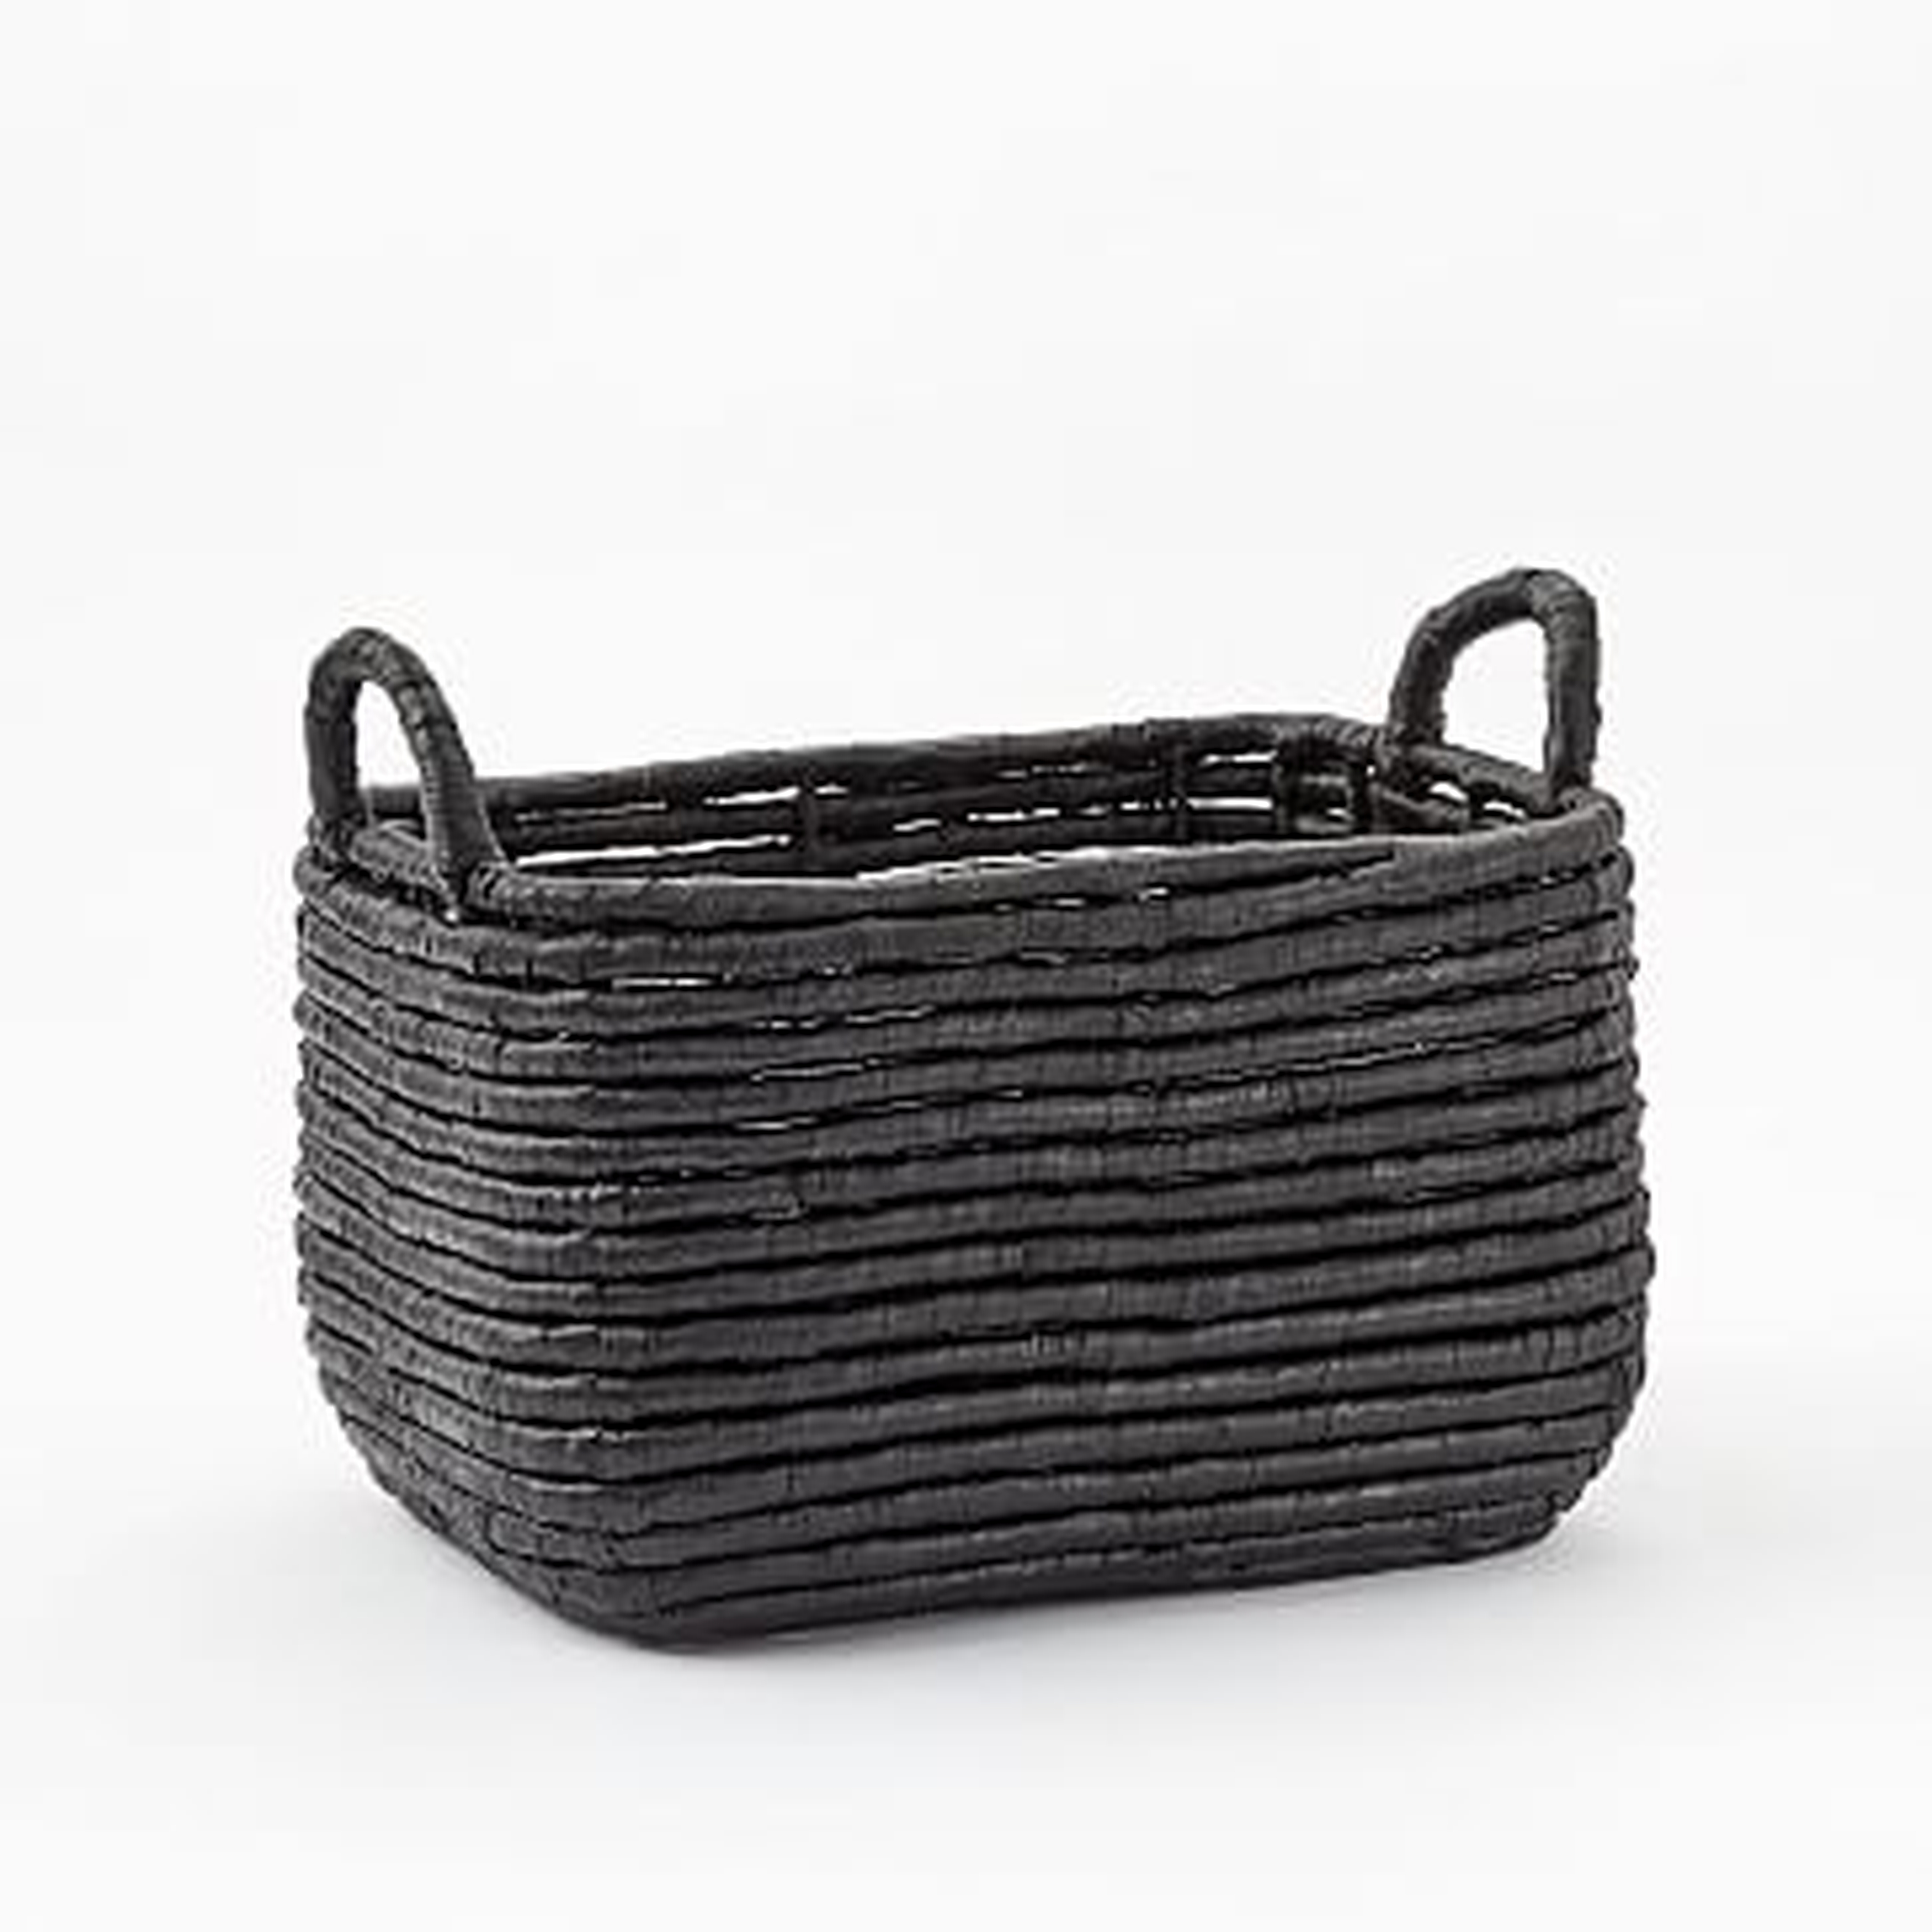 Woven Seagrass Baskets, Black, Medium Rectangle - West Elm